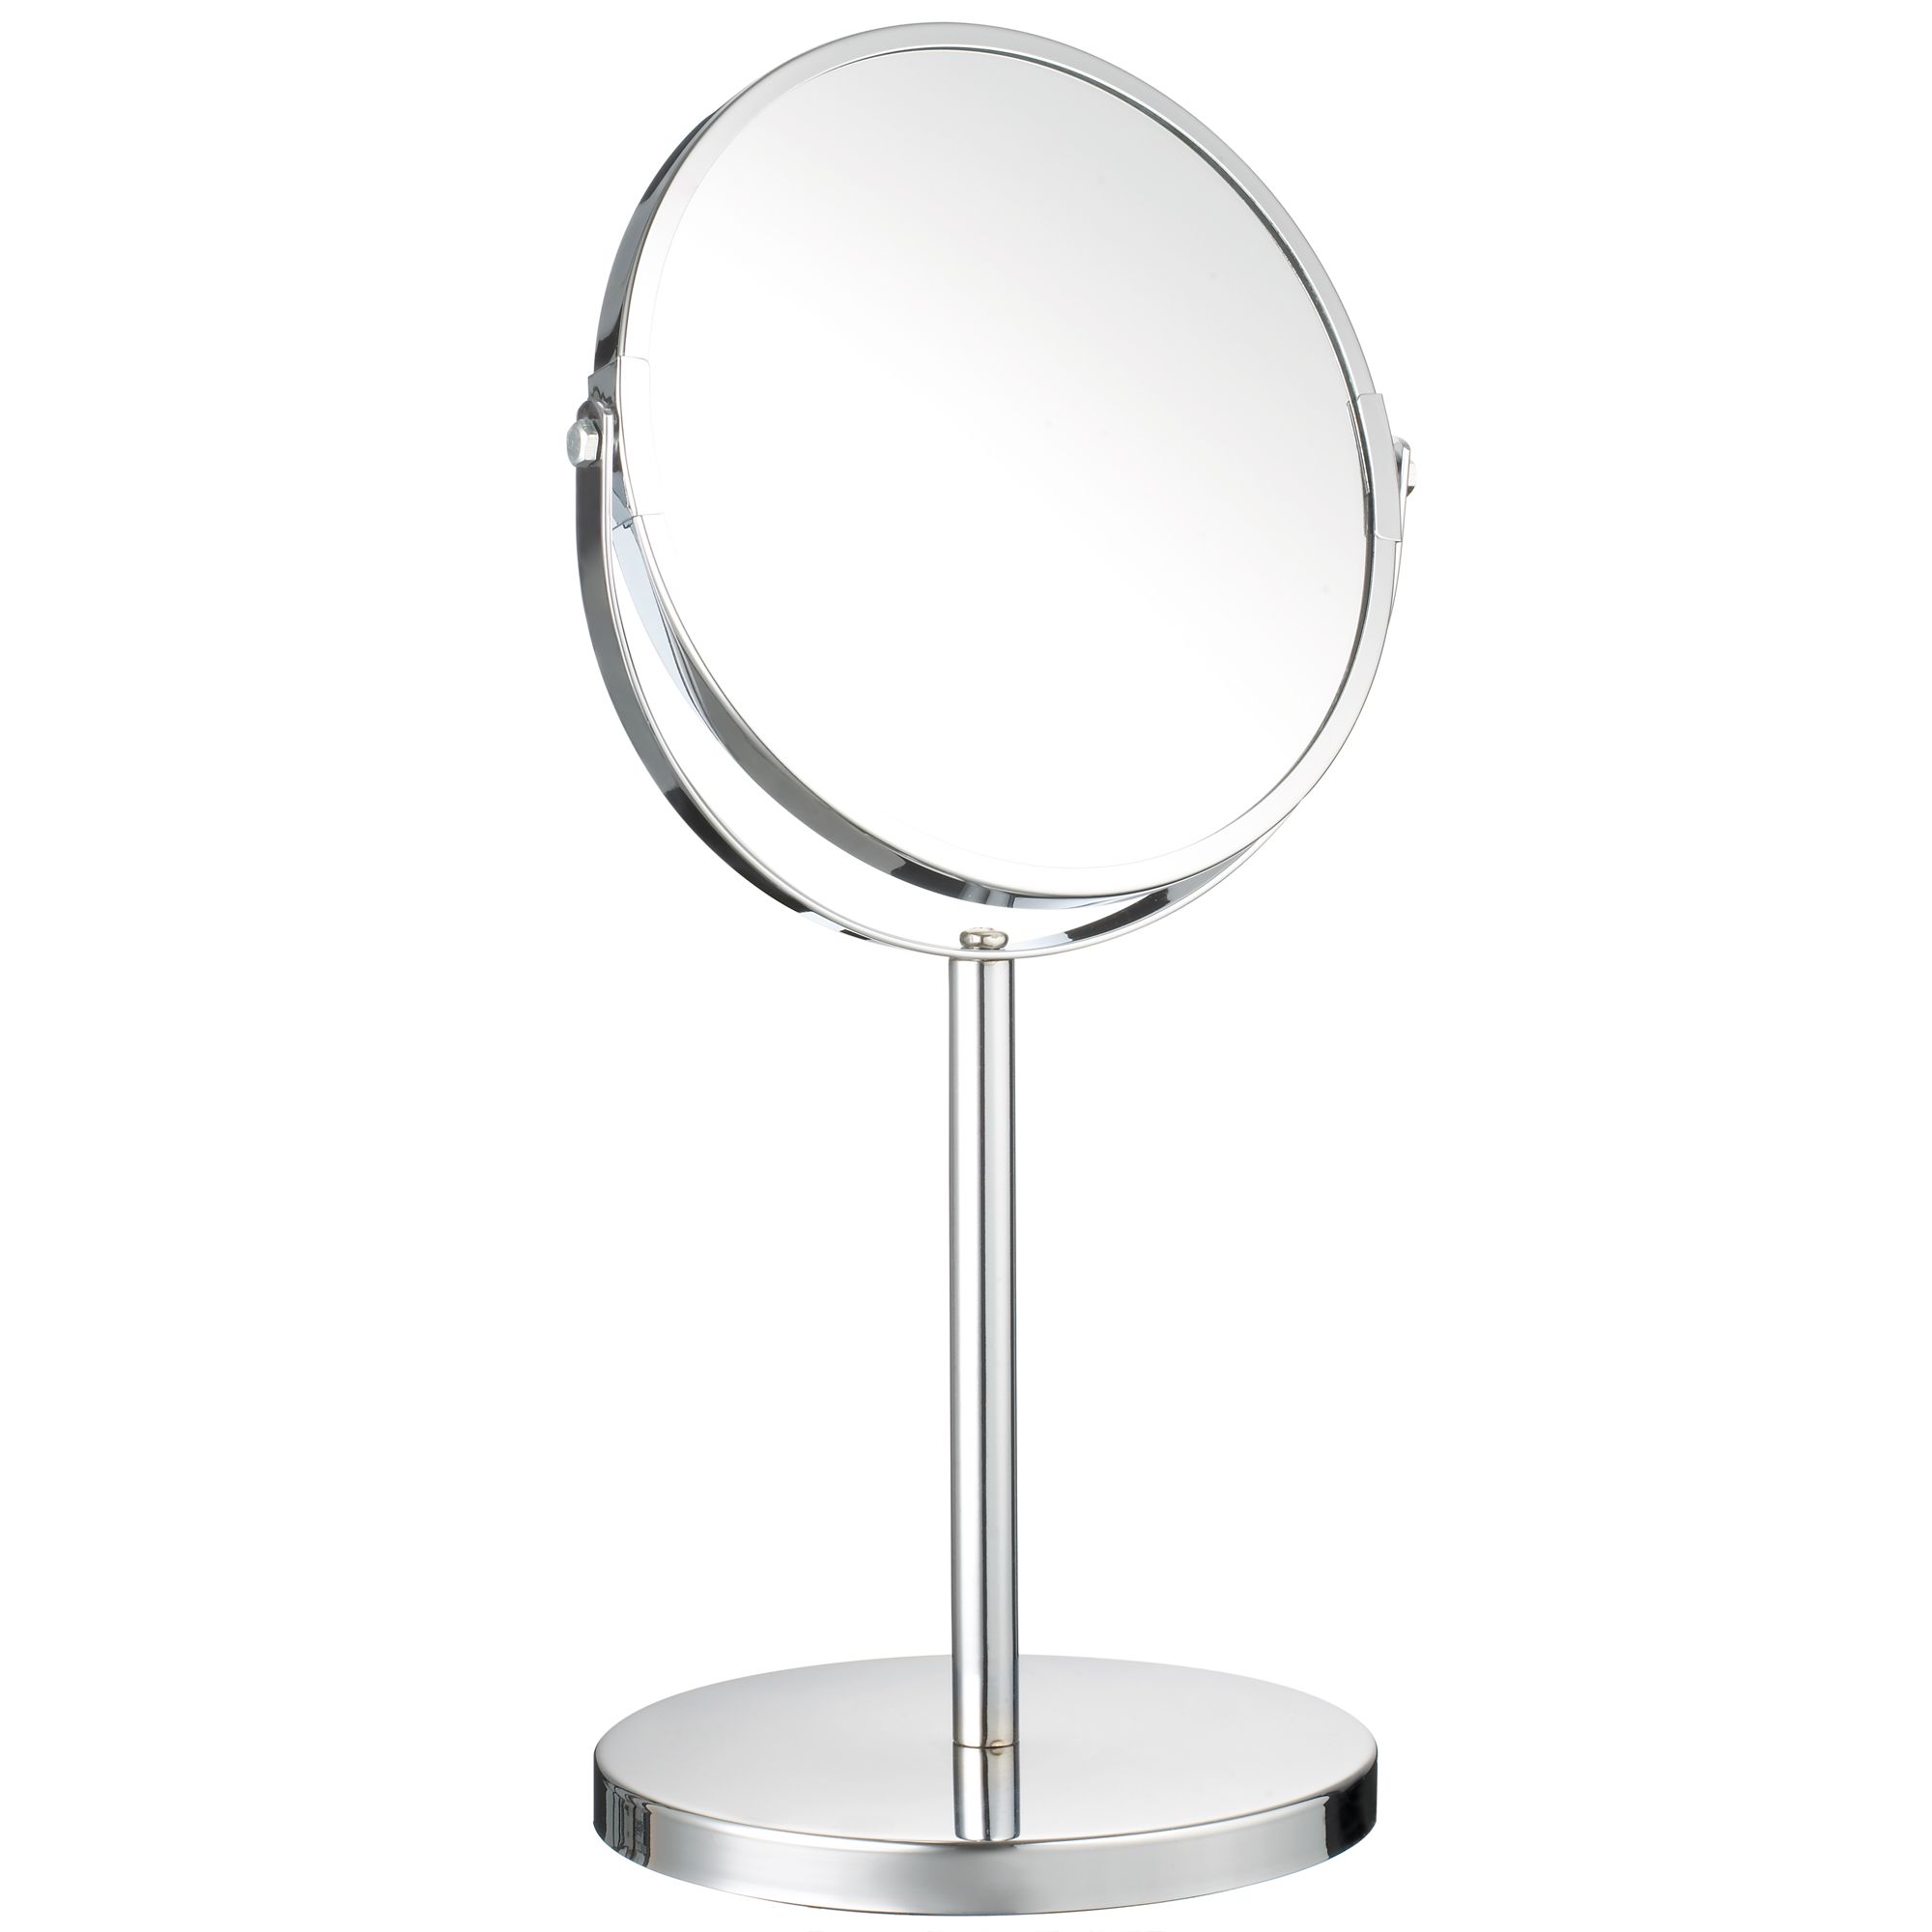 John Lewis Heavy Based Pedestal Mirror